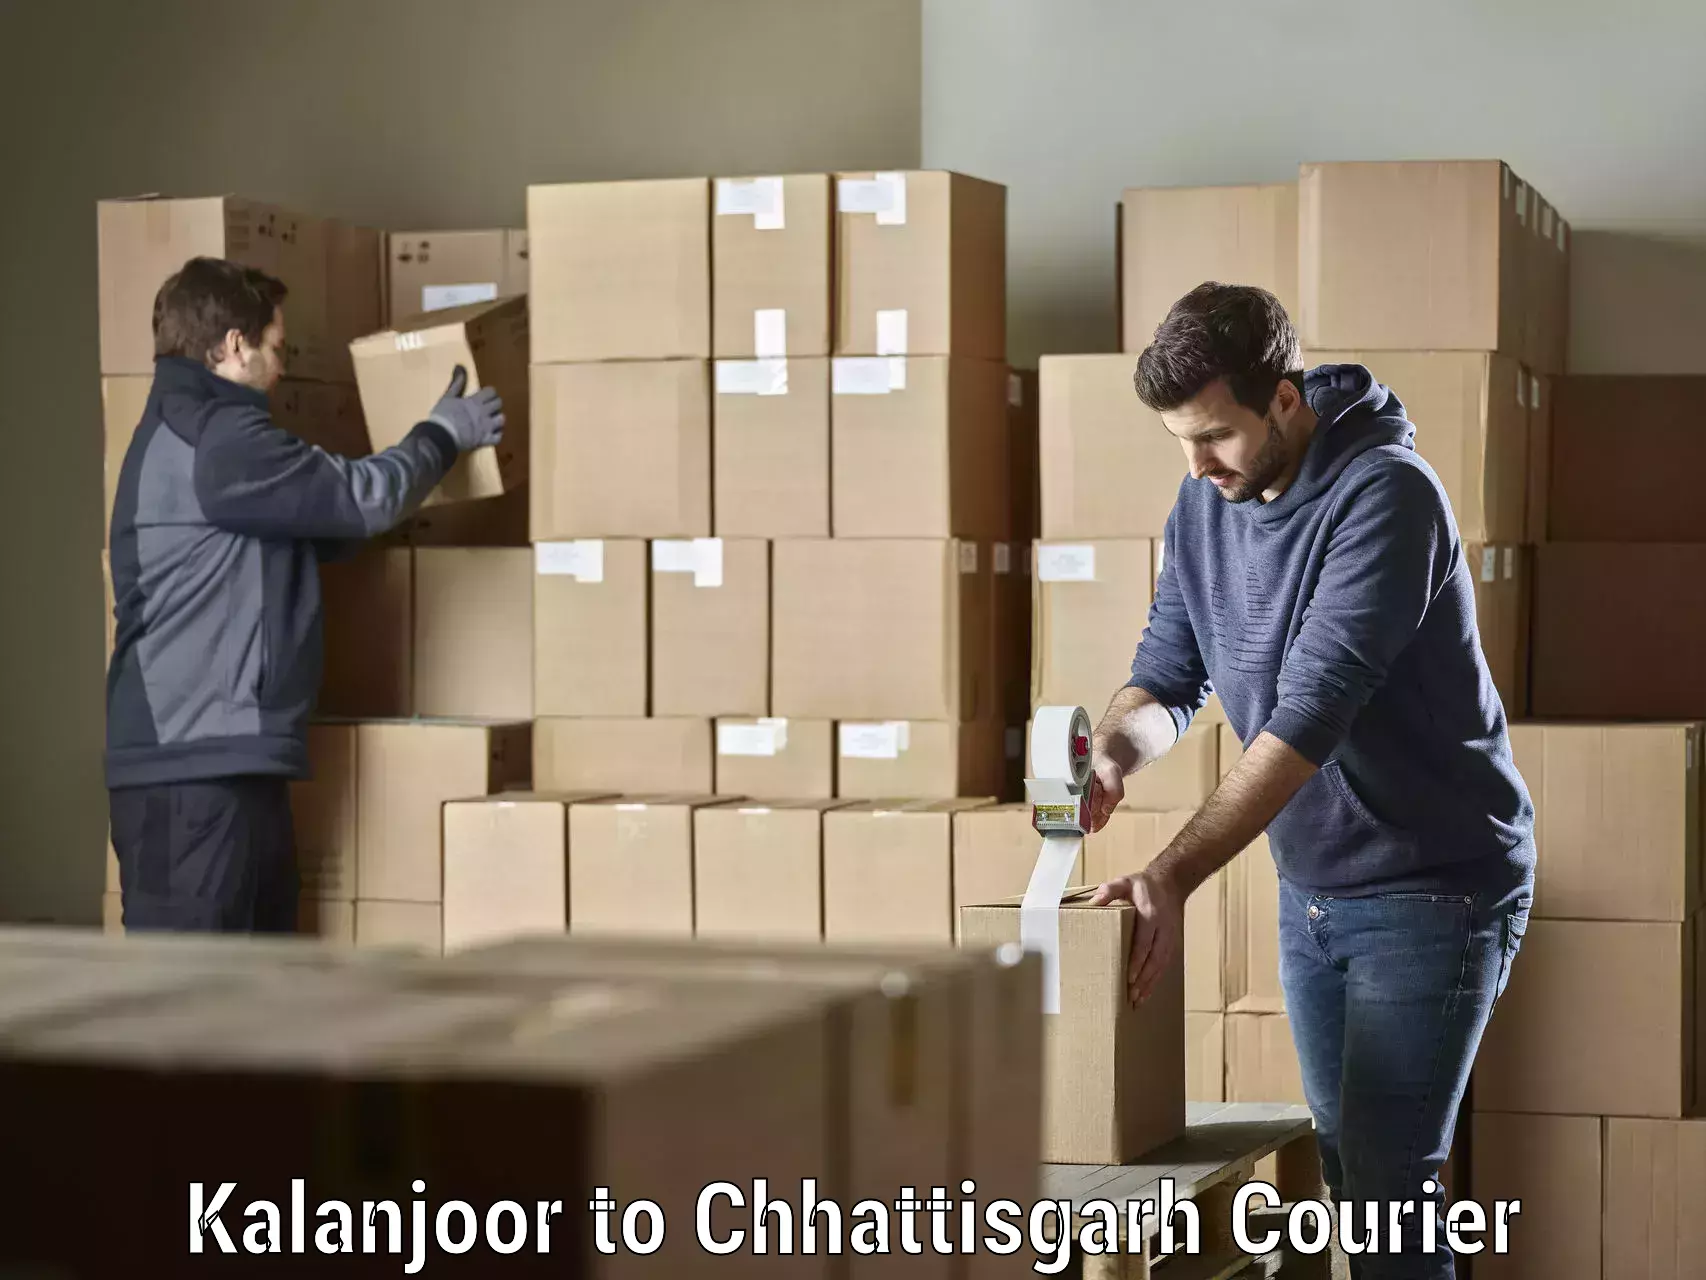 Efficient order fulfillment Kalanjoor to Raigarh